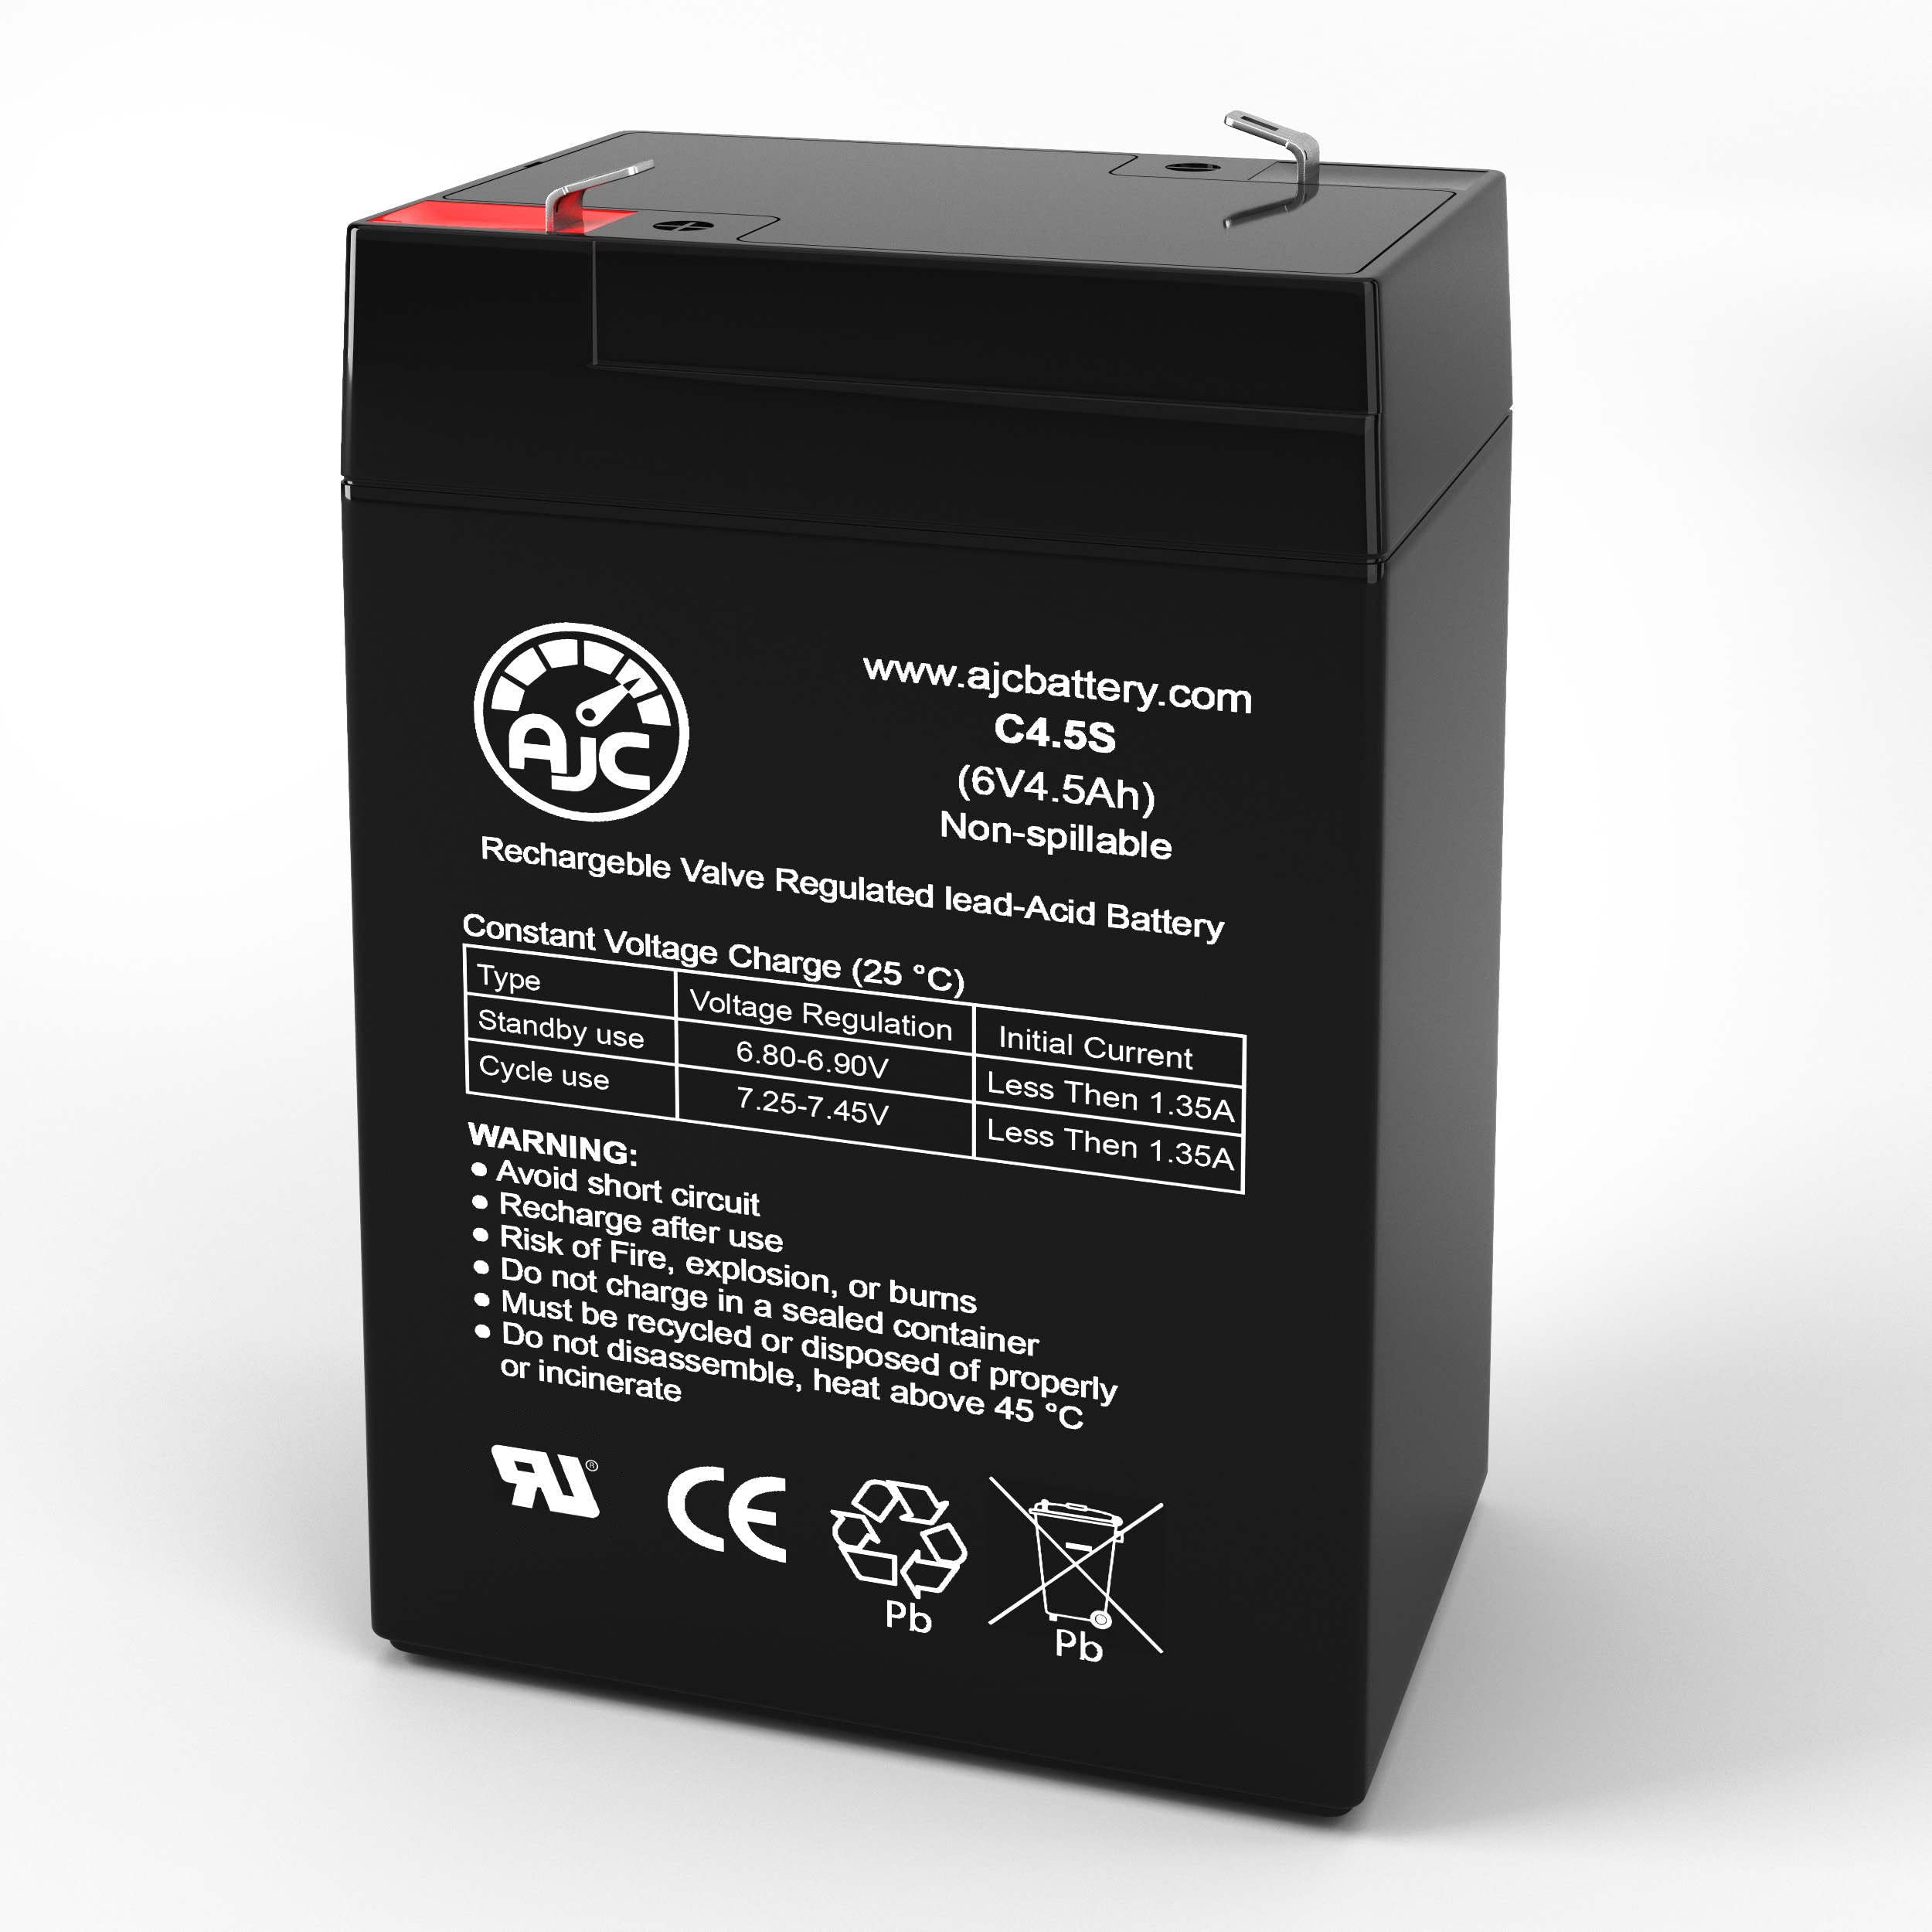 AJC B&B BP45-6 6V 45Ah UPS Battery - This is an AJc Brand Replacement